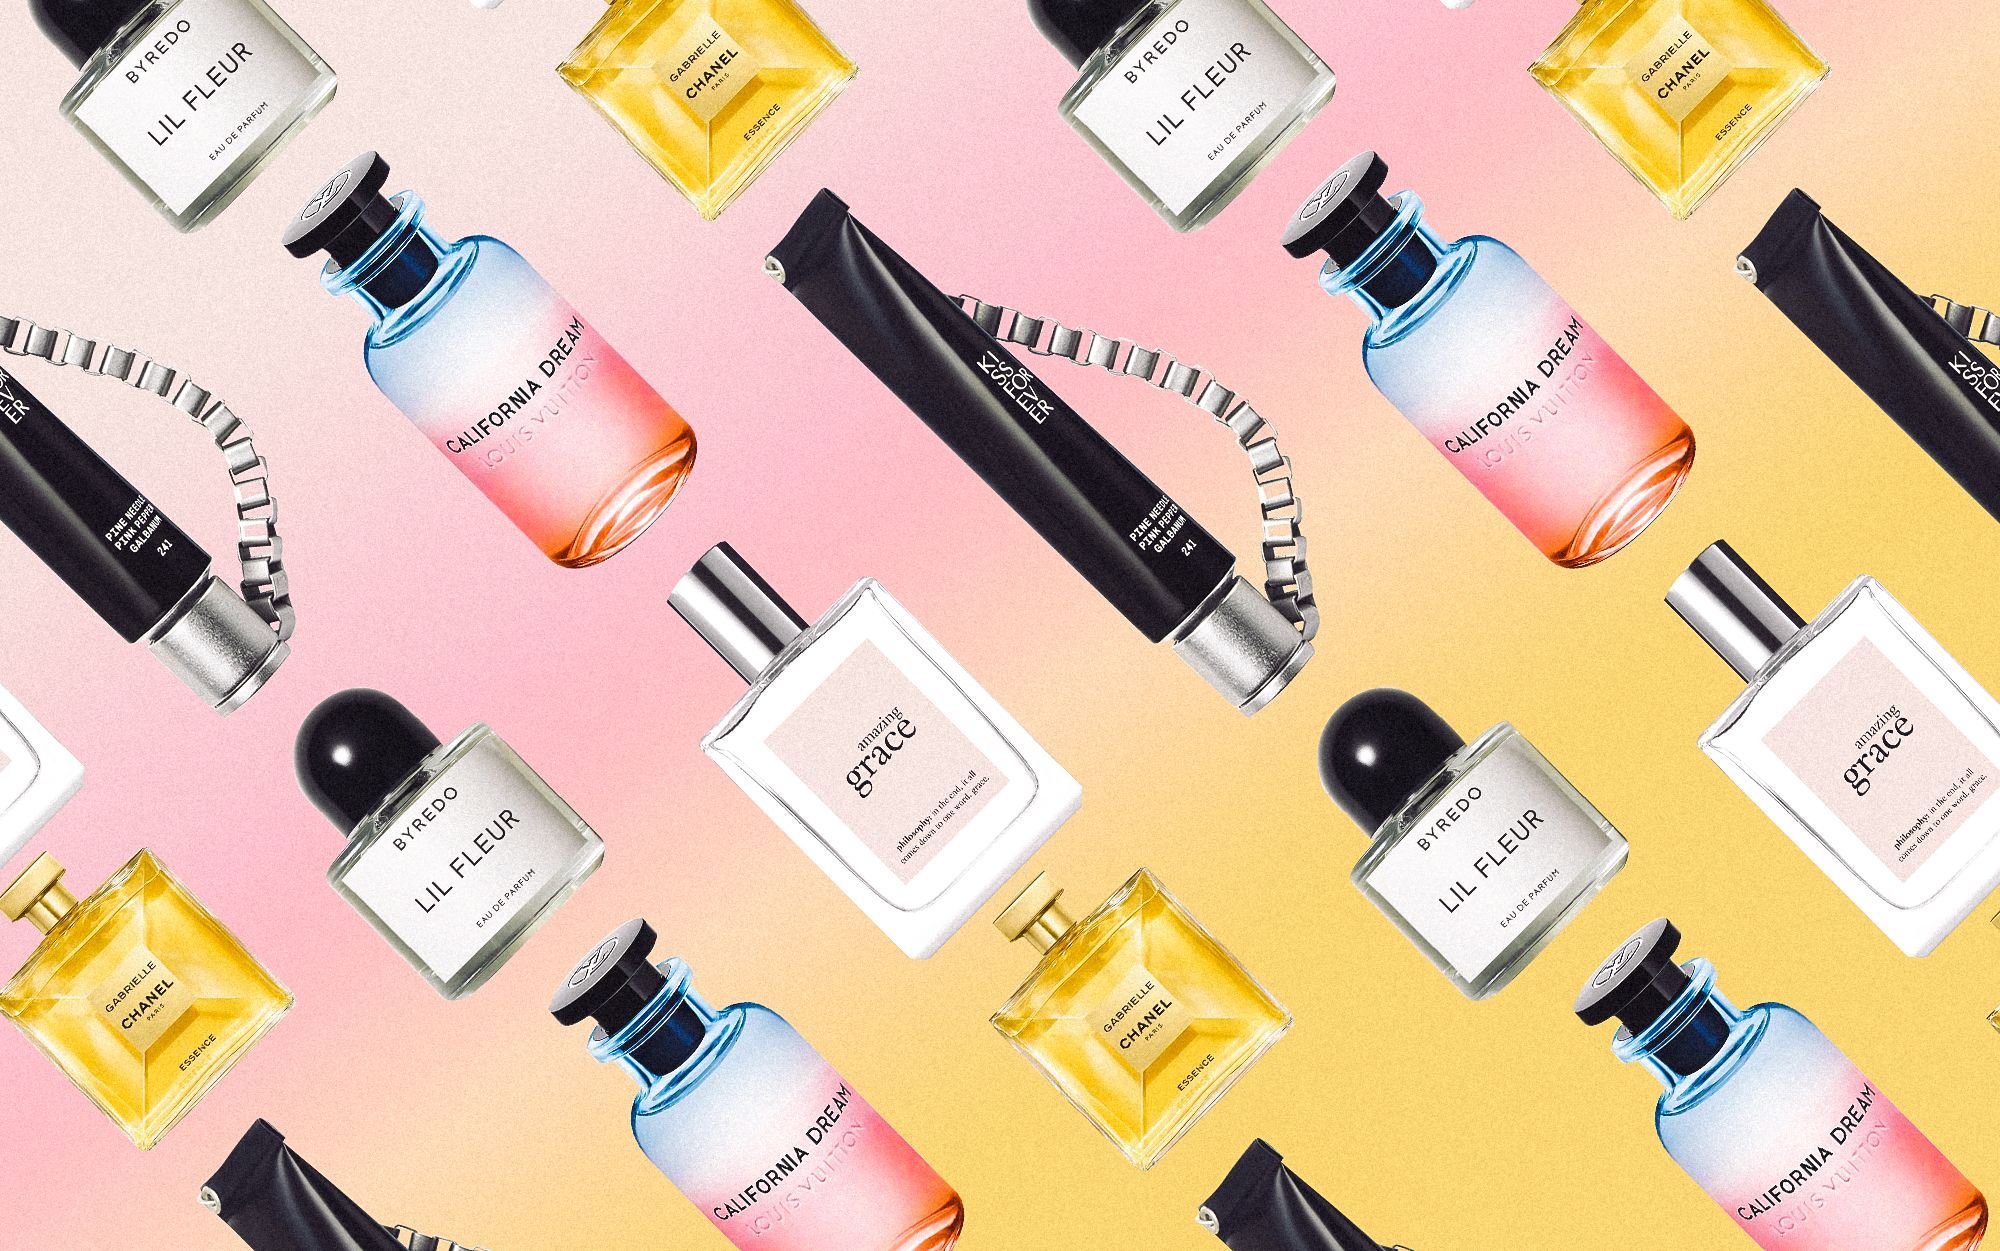 NEW Louis Vuitton Perfume! + Top 5 Louis Vuitton Fragrances